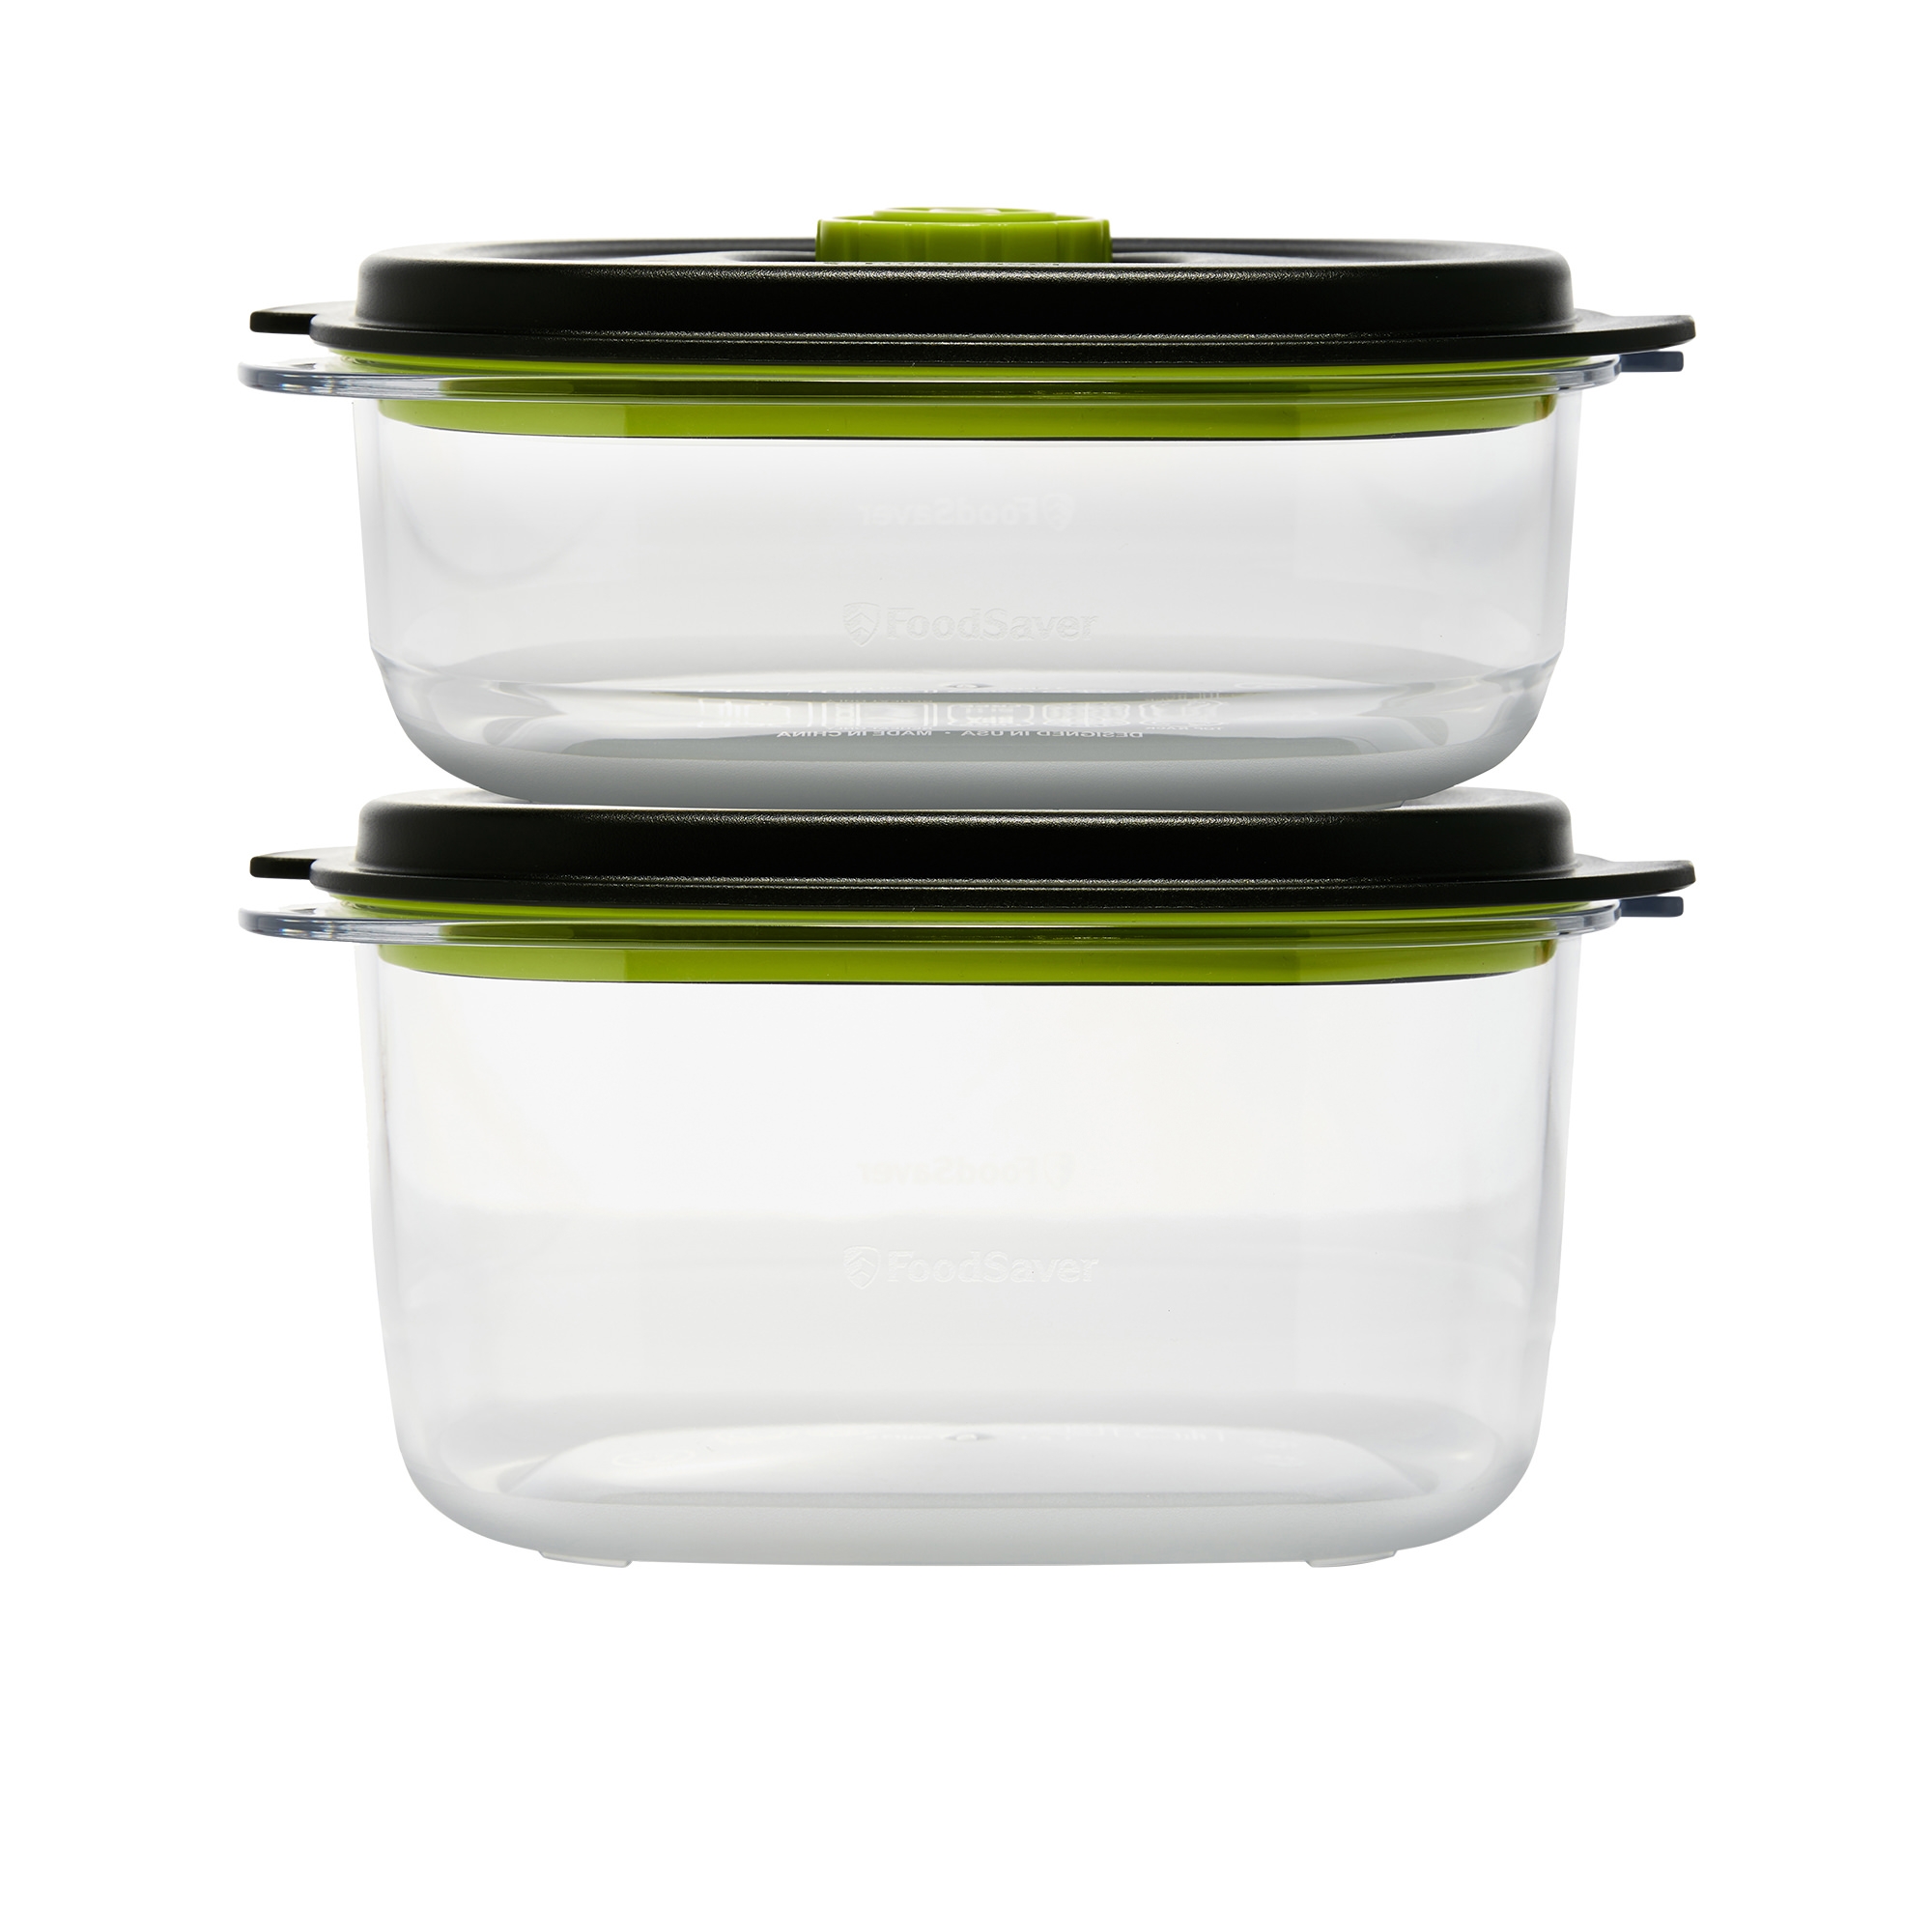 FoodSaver Preserve & Marinate Container 3 & 5 Cup Set 2pc Black Image 1